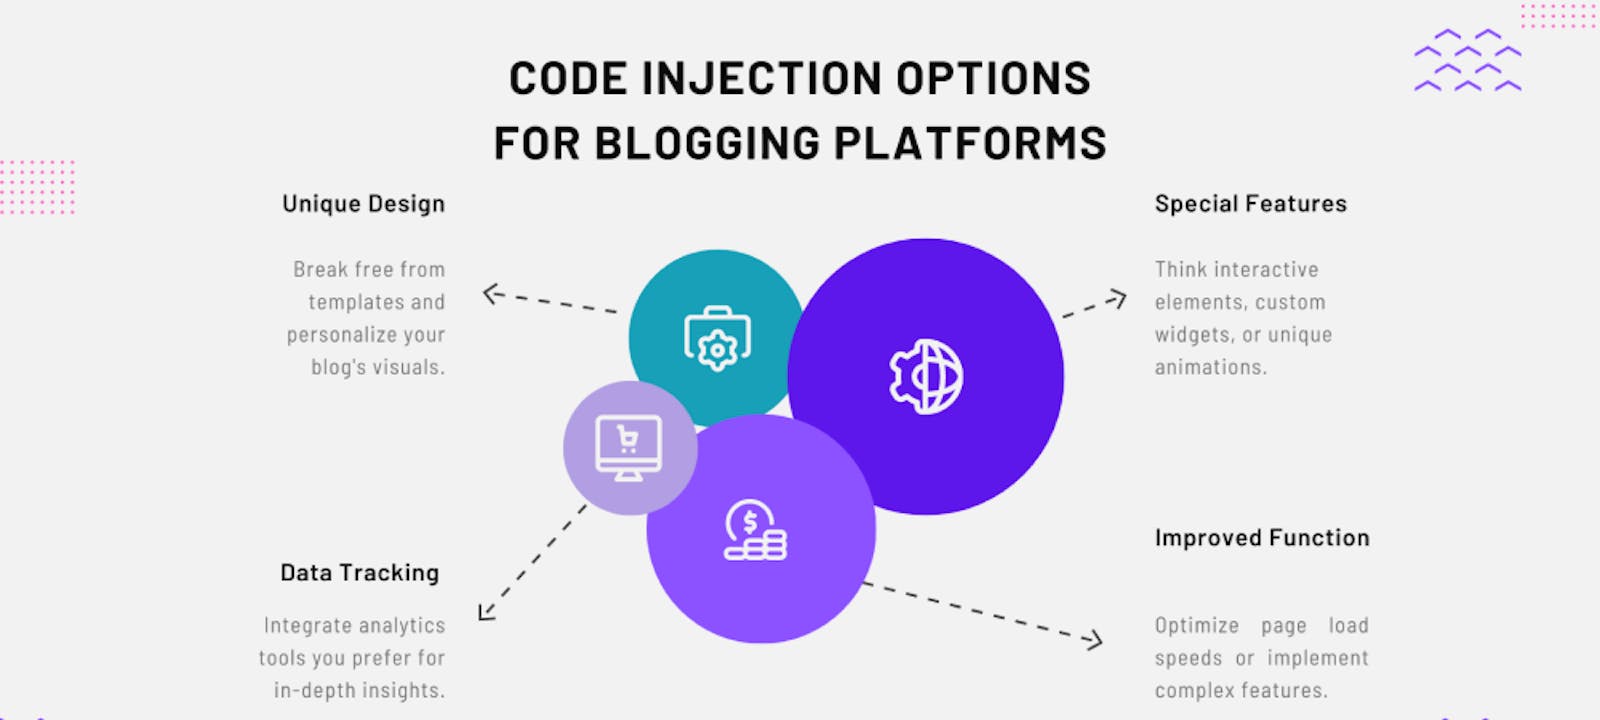 Code Injection Options for Blogging Platforms